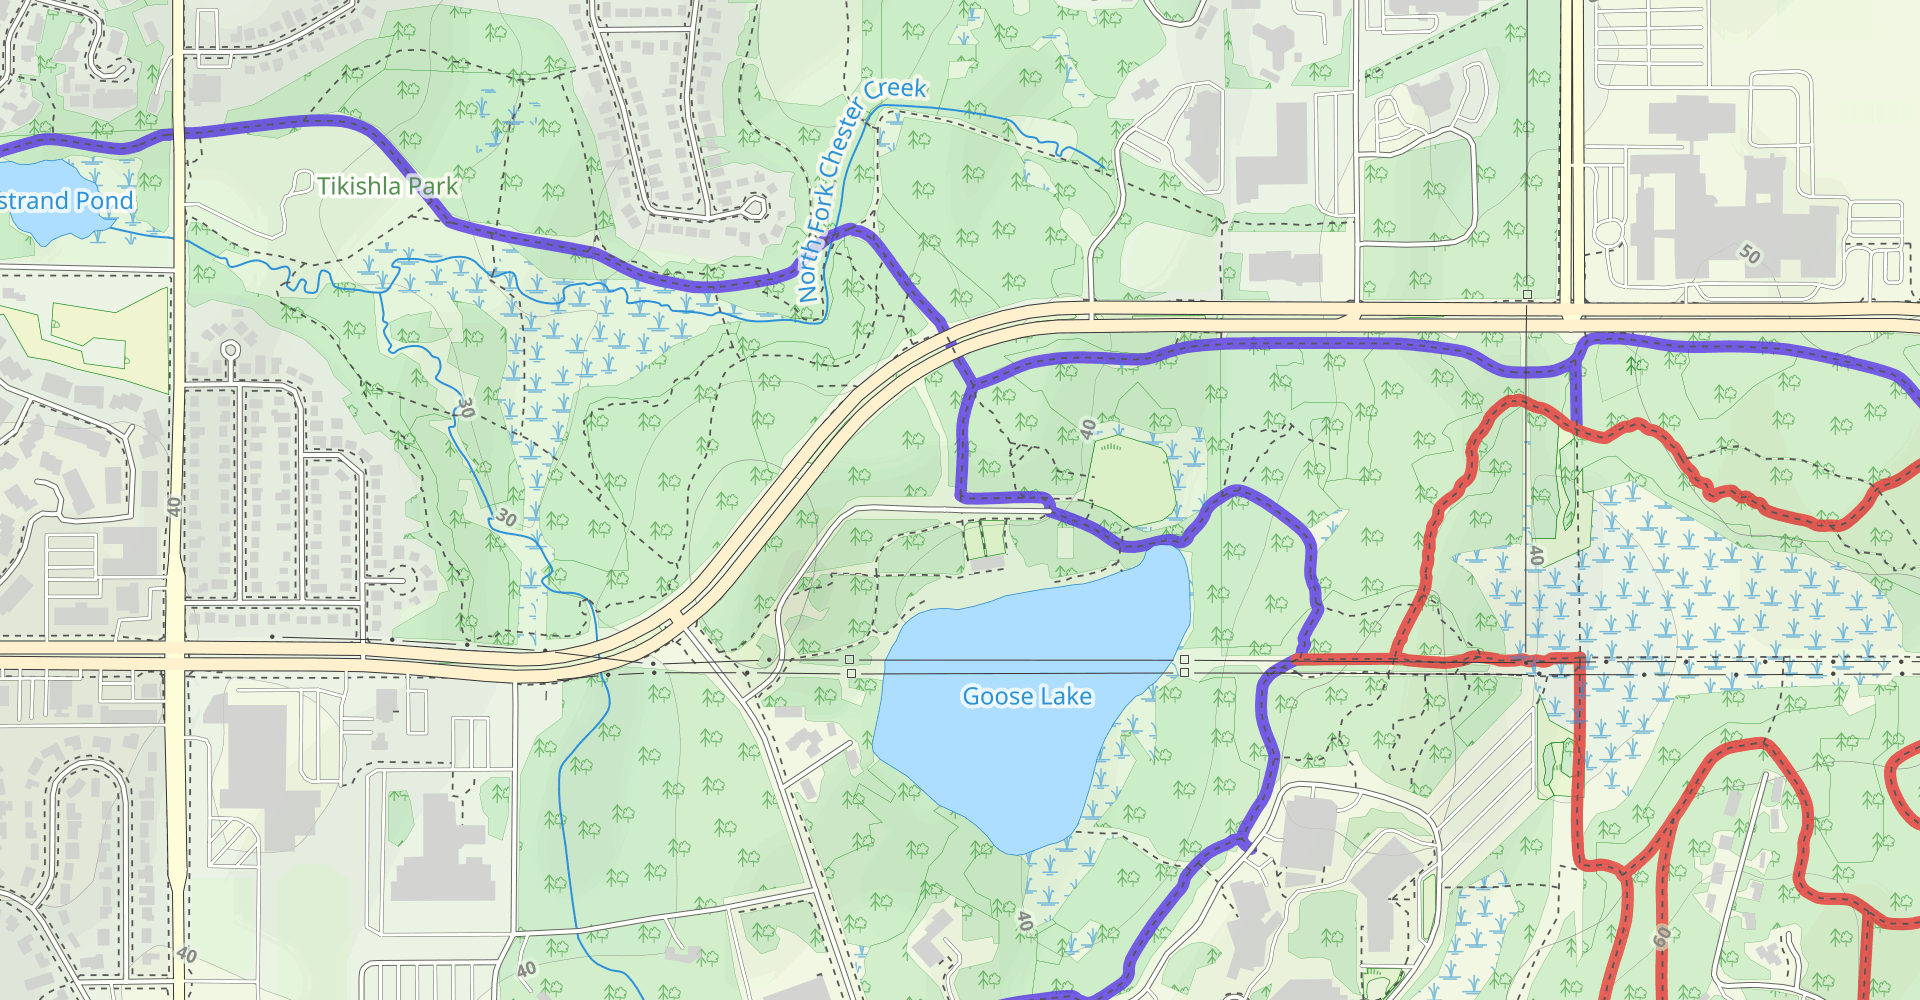 Goose Lake to Woodside Park via Chester Creek Bike Trail